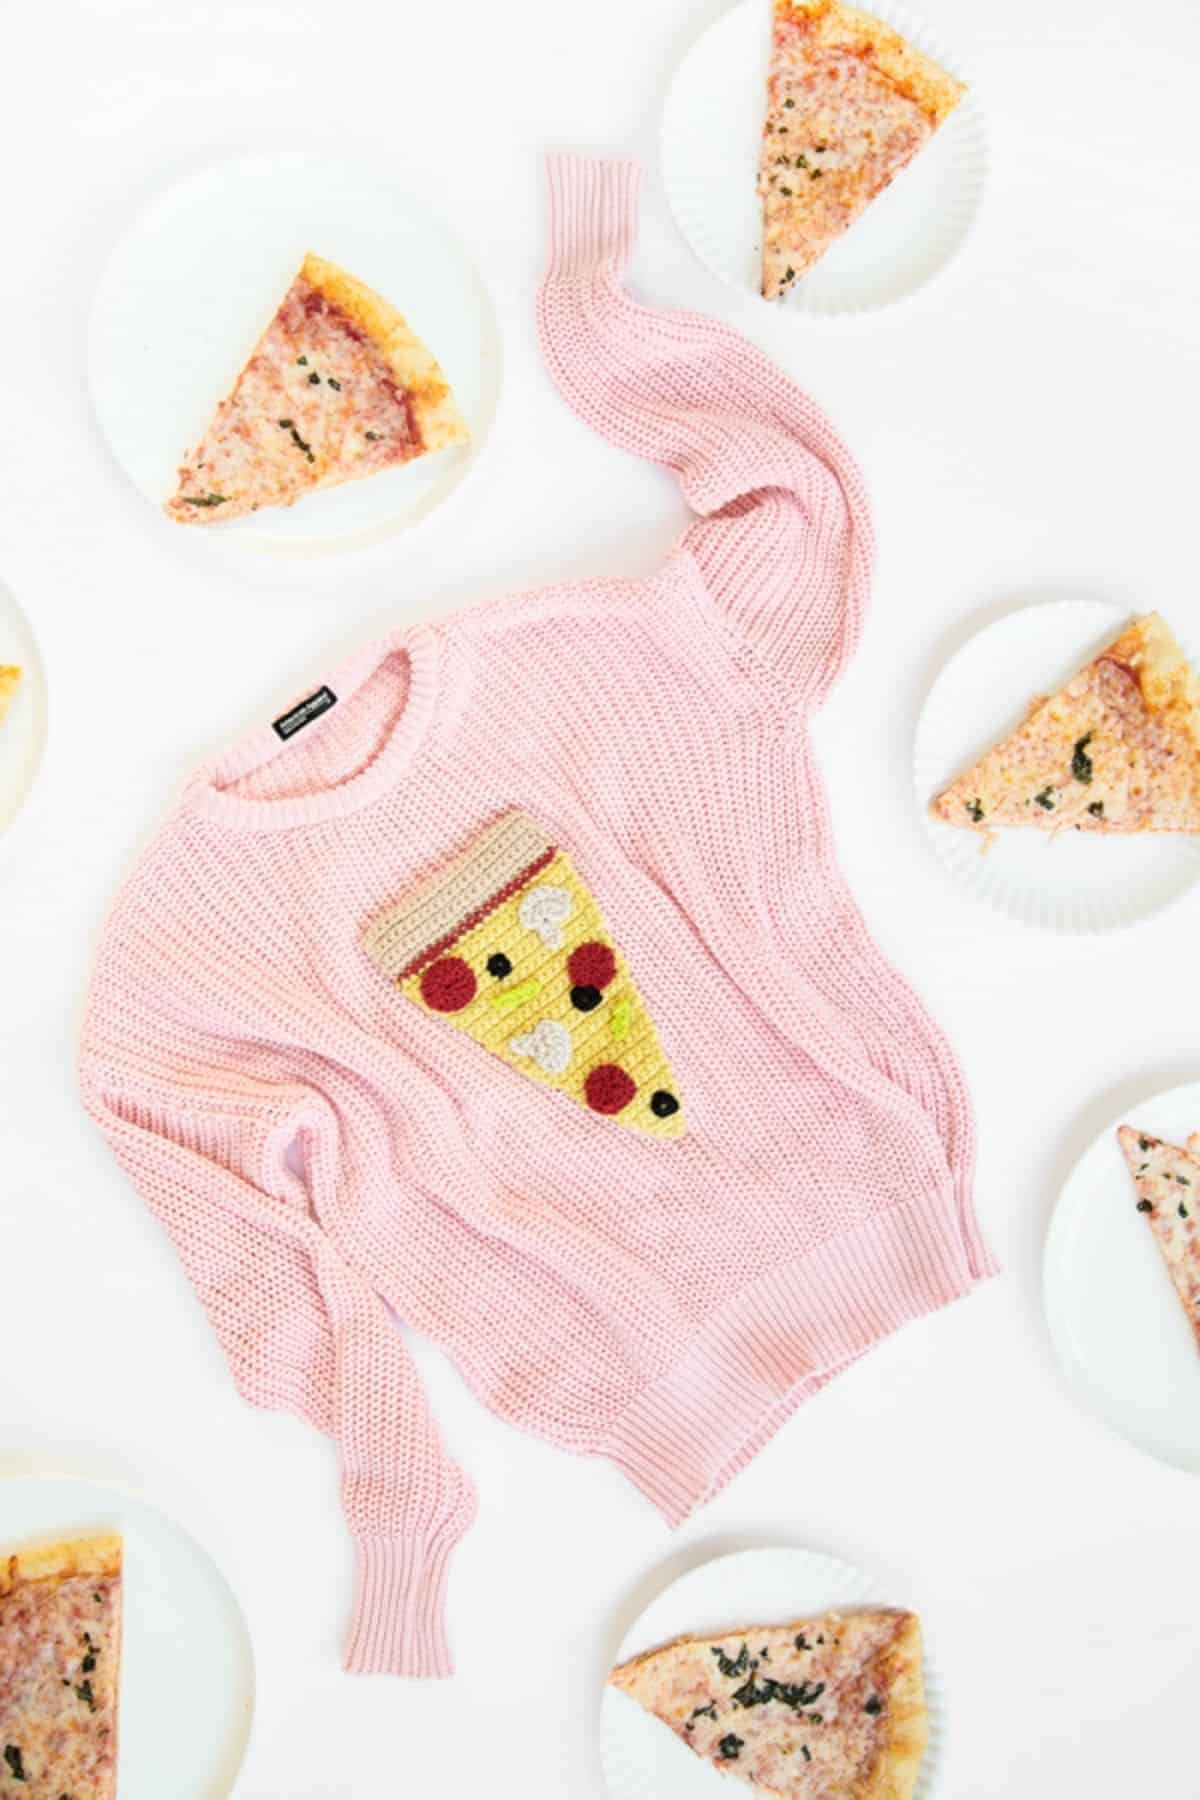 DIY Crochet Pizza Sweater